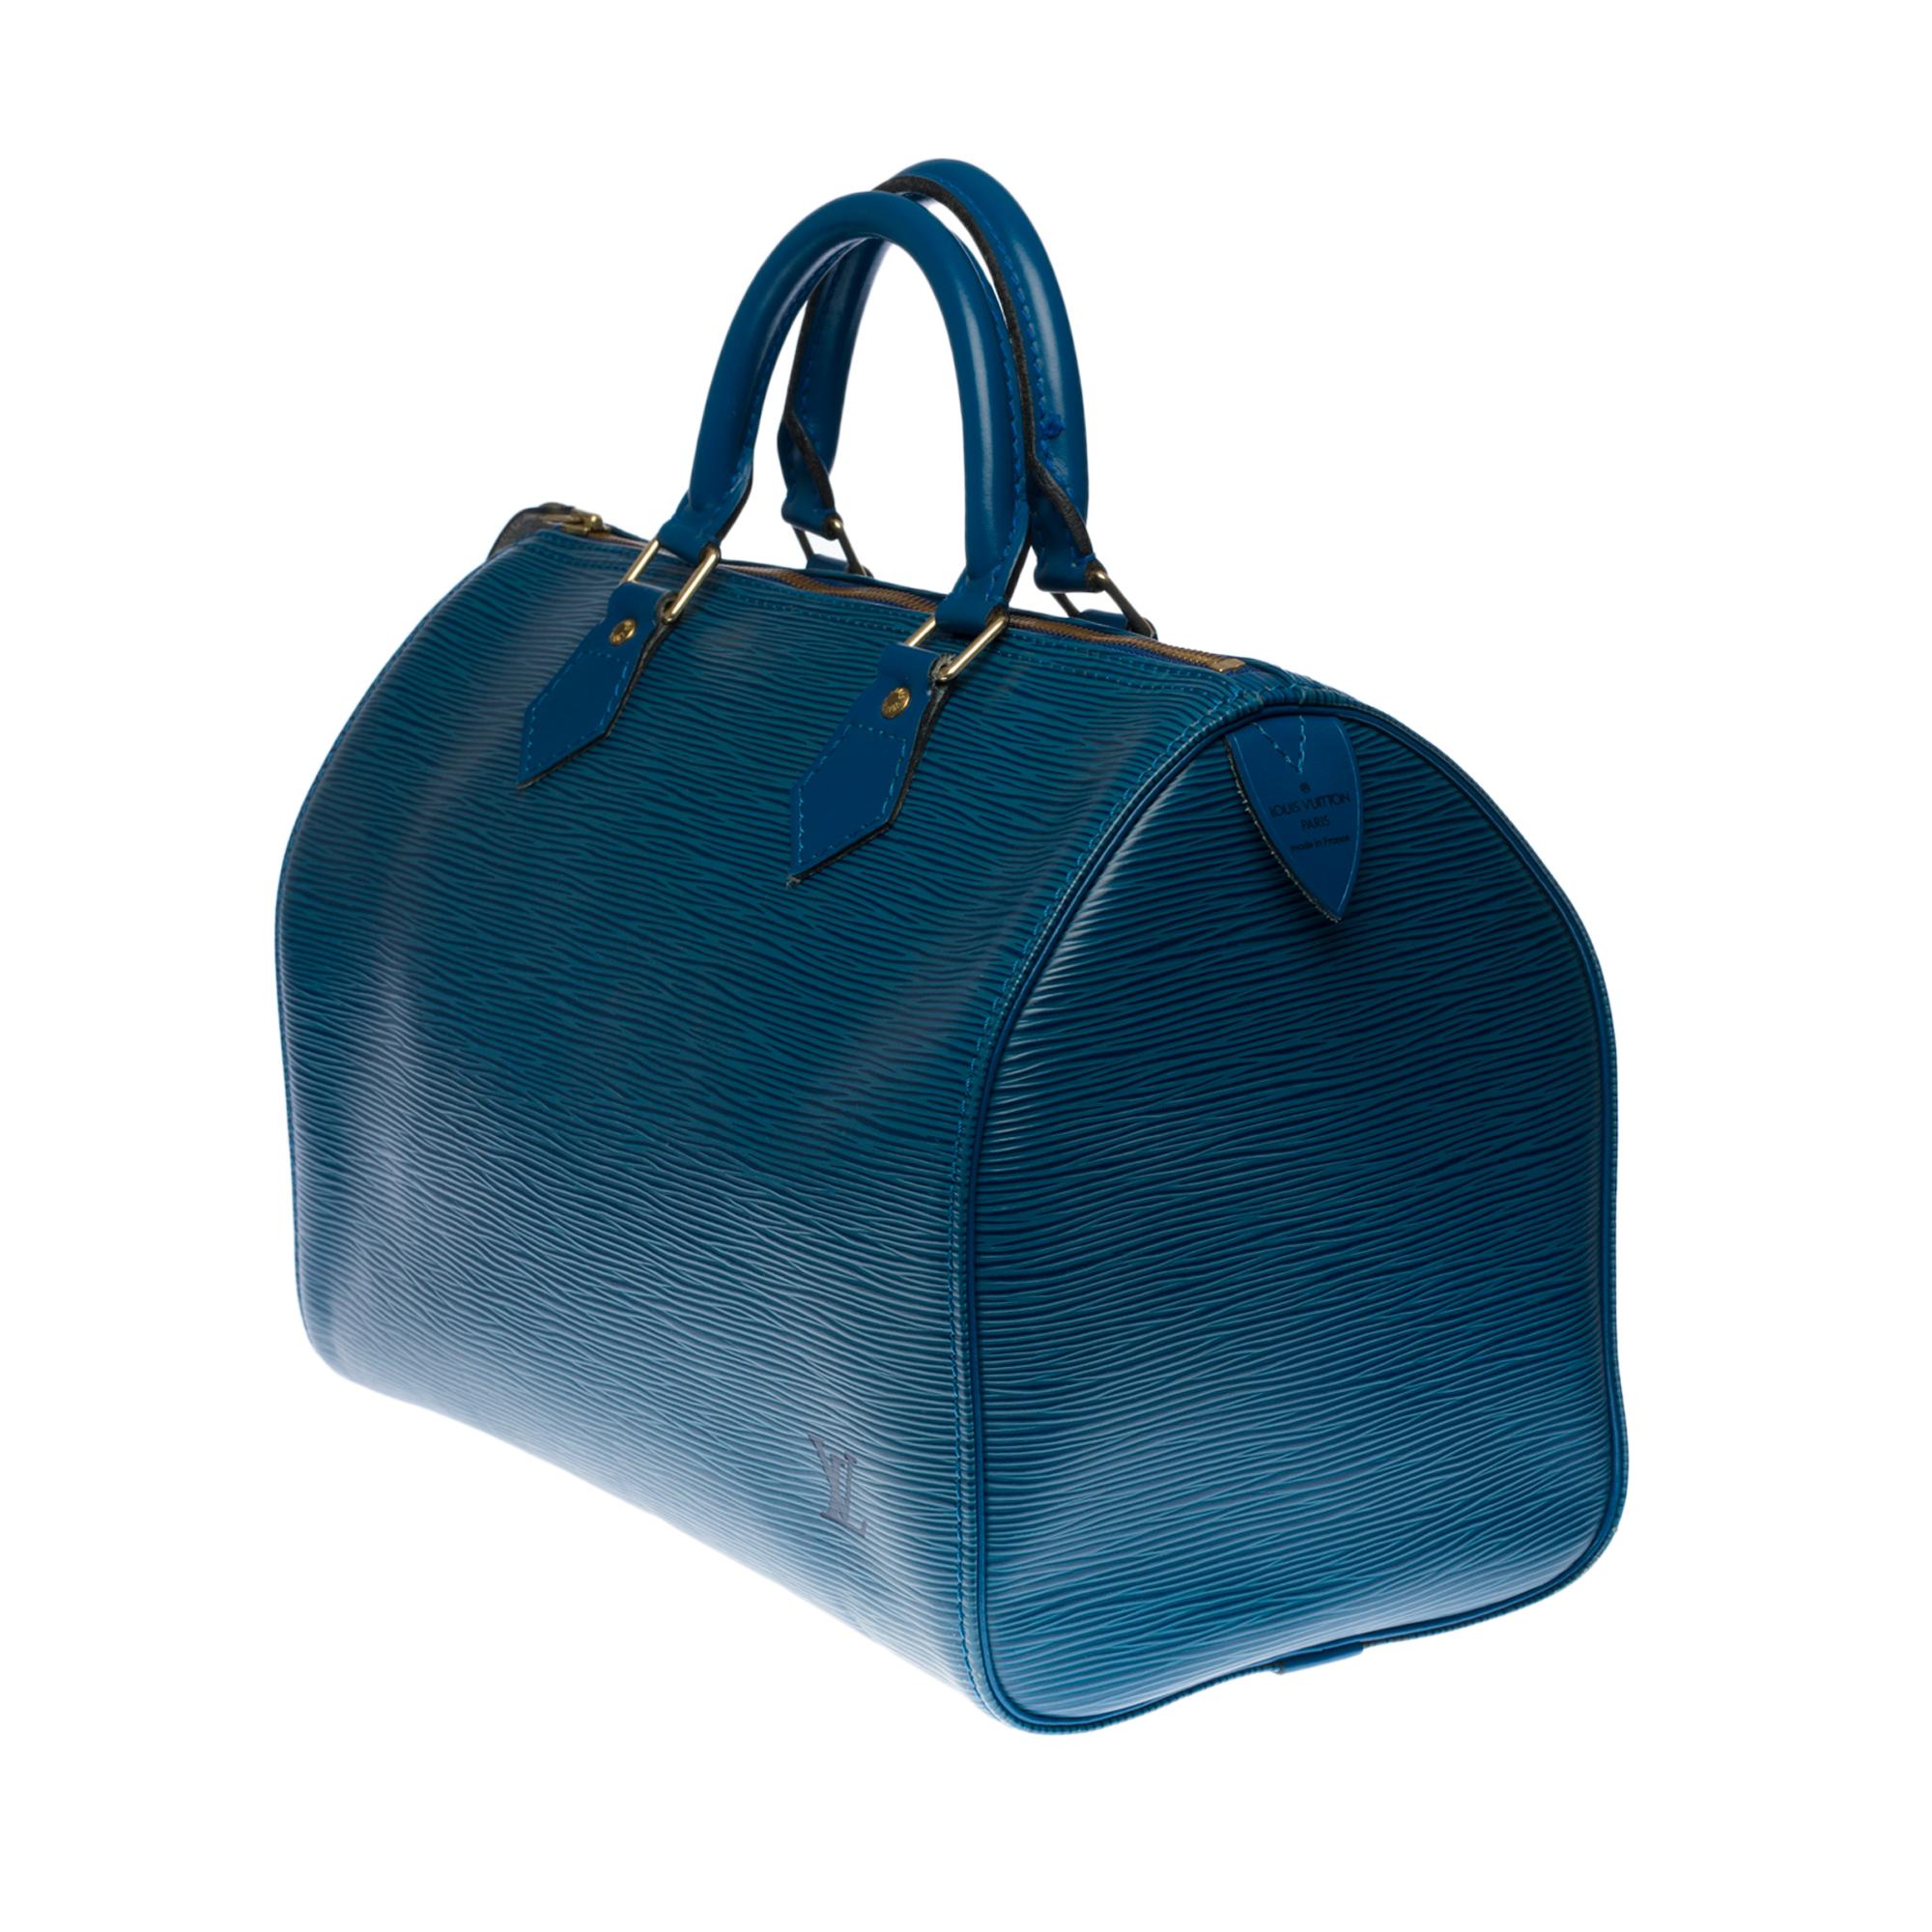 Louis Vuitton Speedy 30 handbag in blue épi leather and gold hardware In Good Condition In Paris, IDF